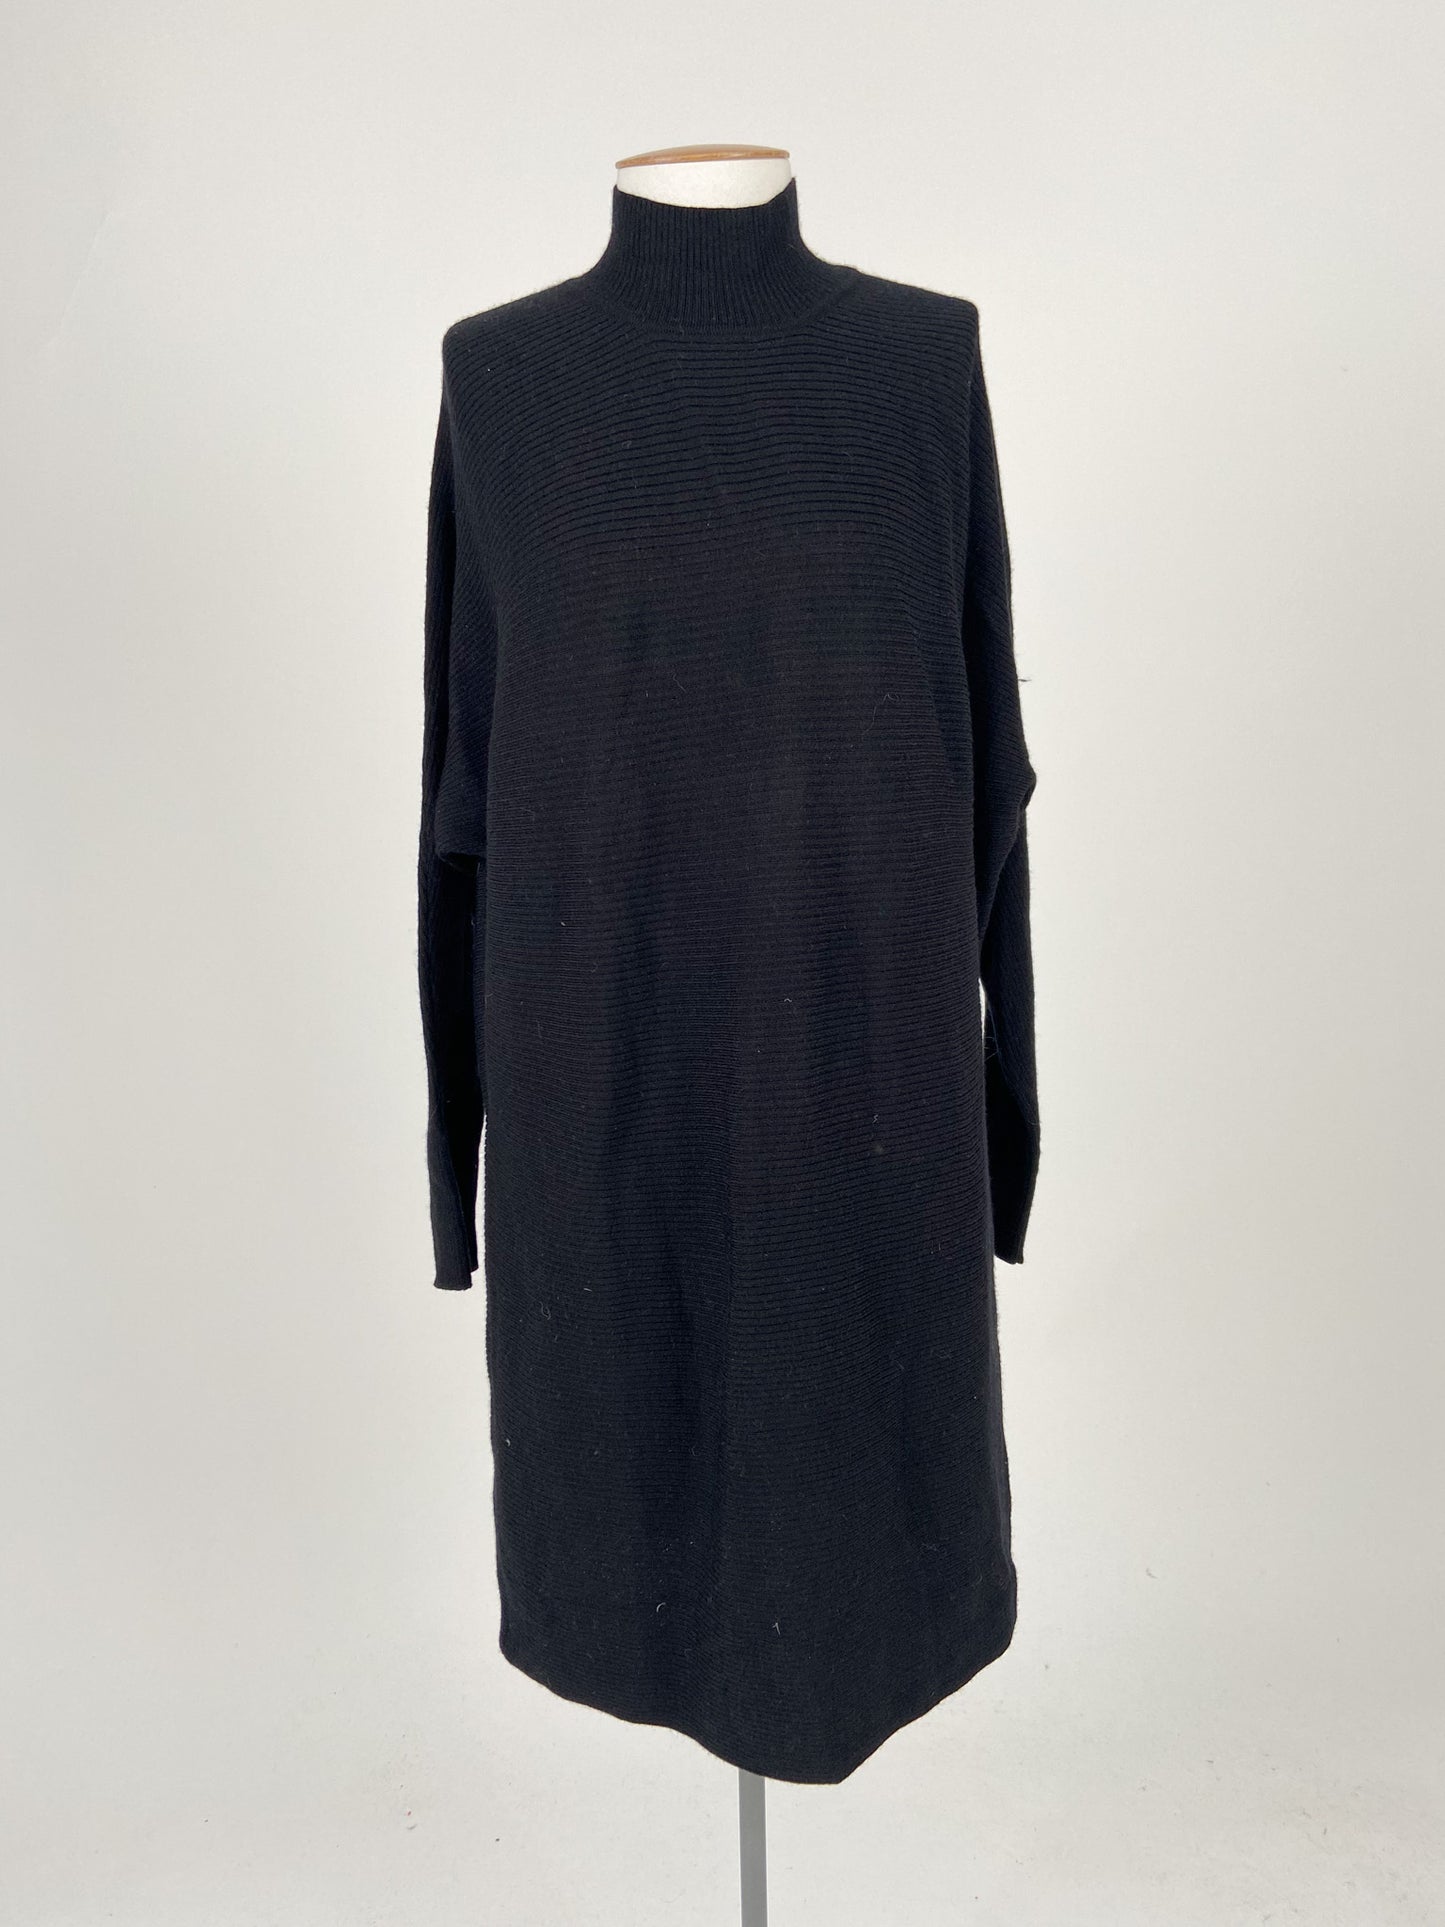 Max | Black Casual/Workwear Dress | Size S